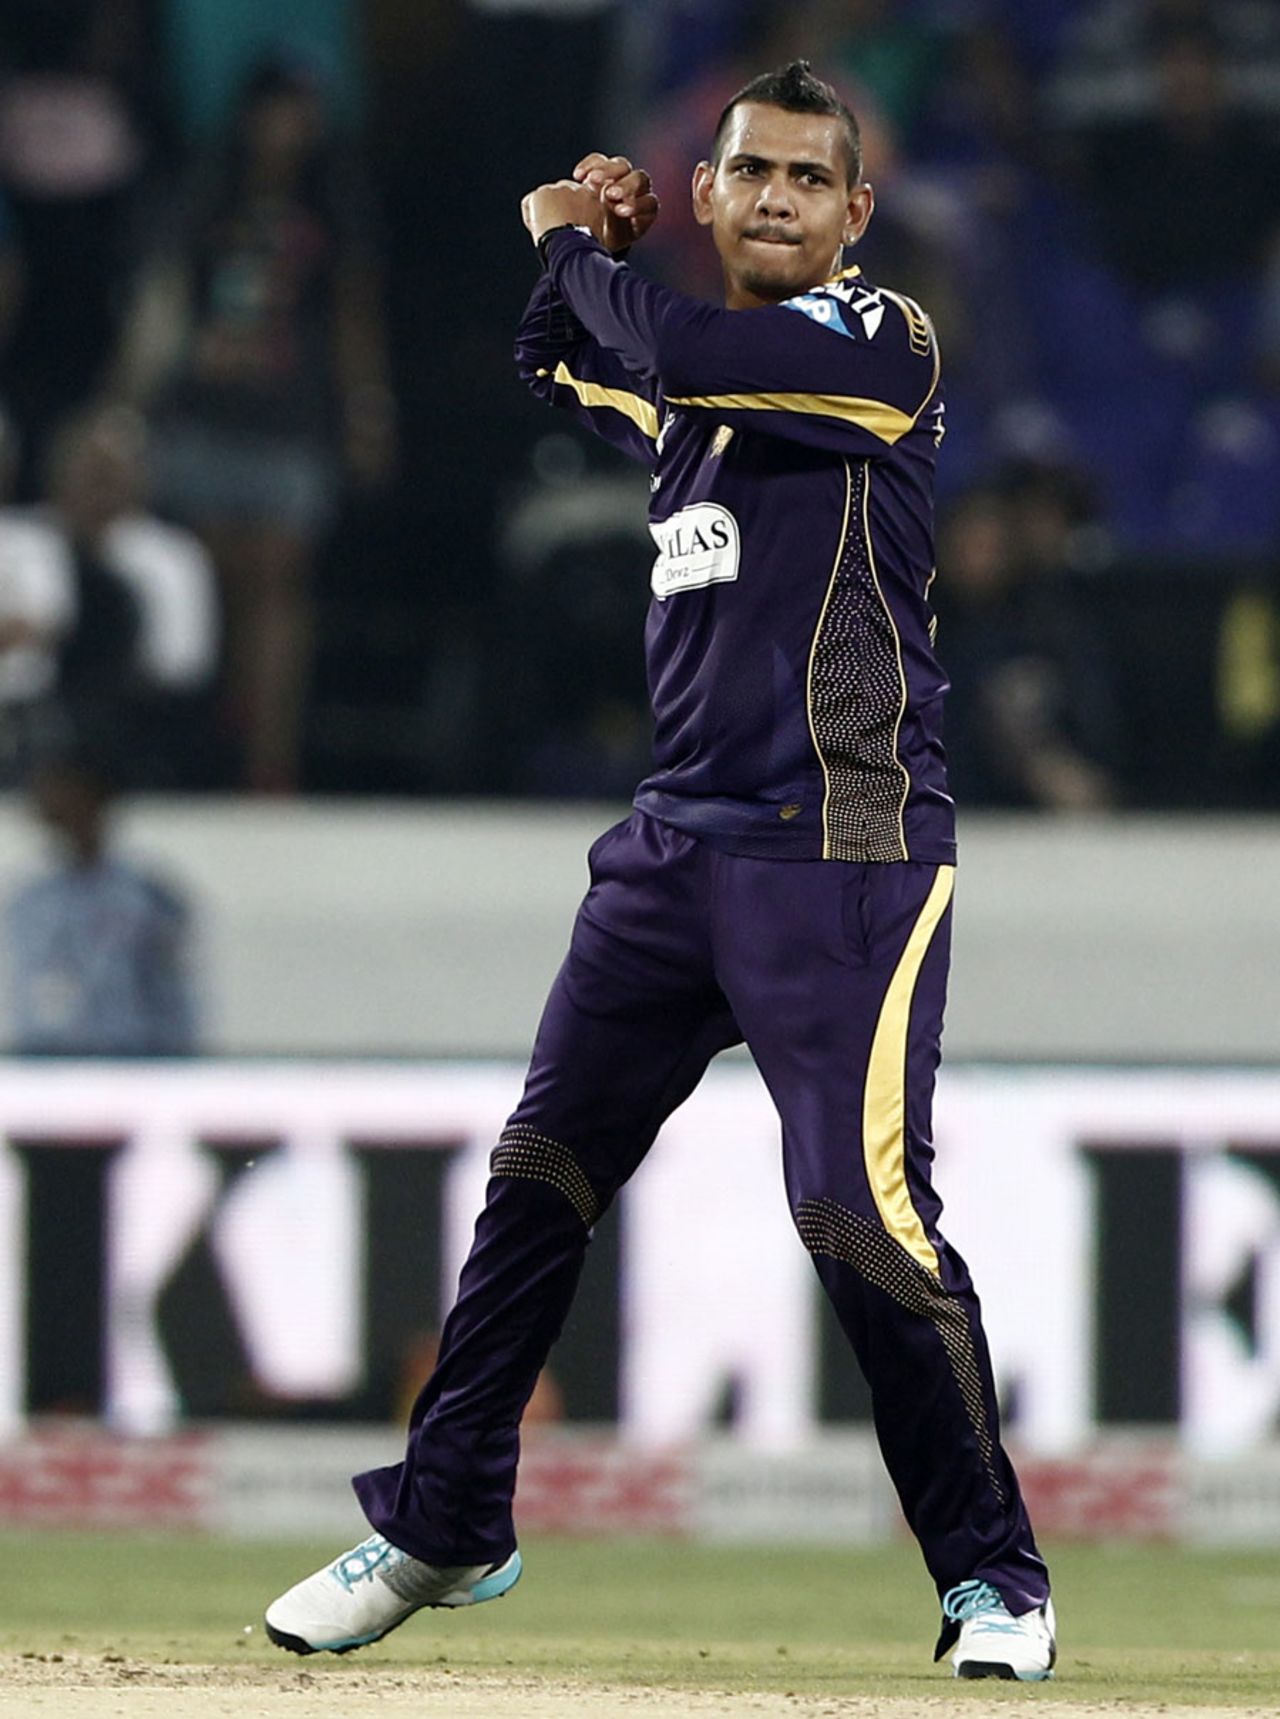 Sunil Narine bamboozled the Lahore Lions batsmen, Kolkata Knight Riders v Lahore Lions, Champions League T20, Hyderabad, September 21, 2014